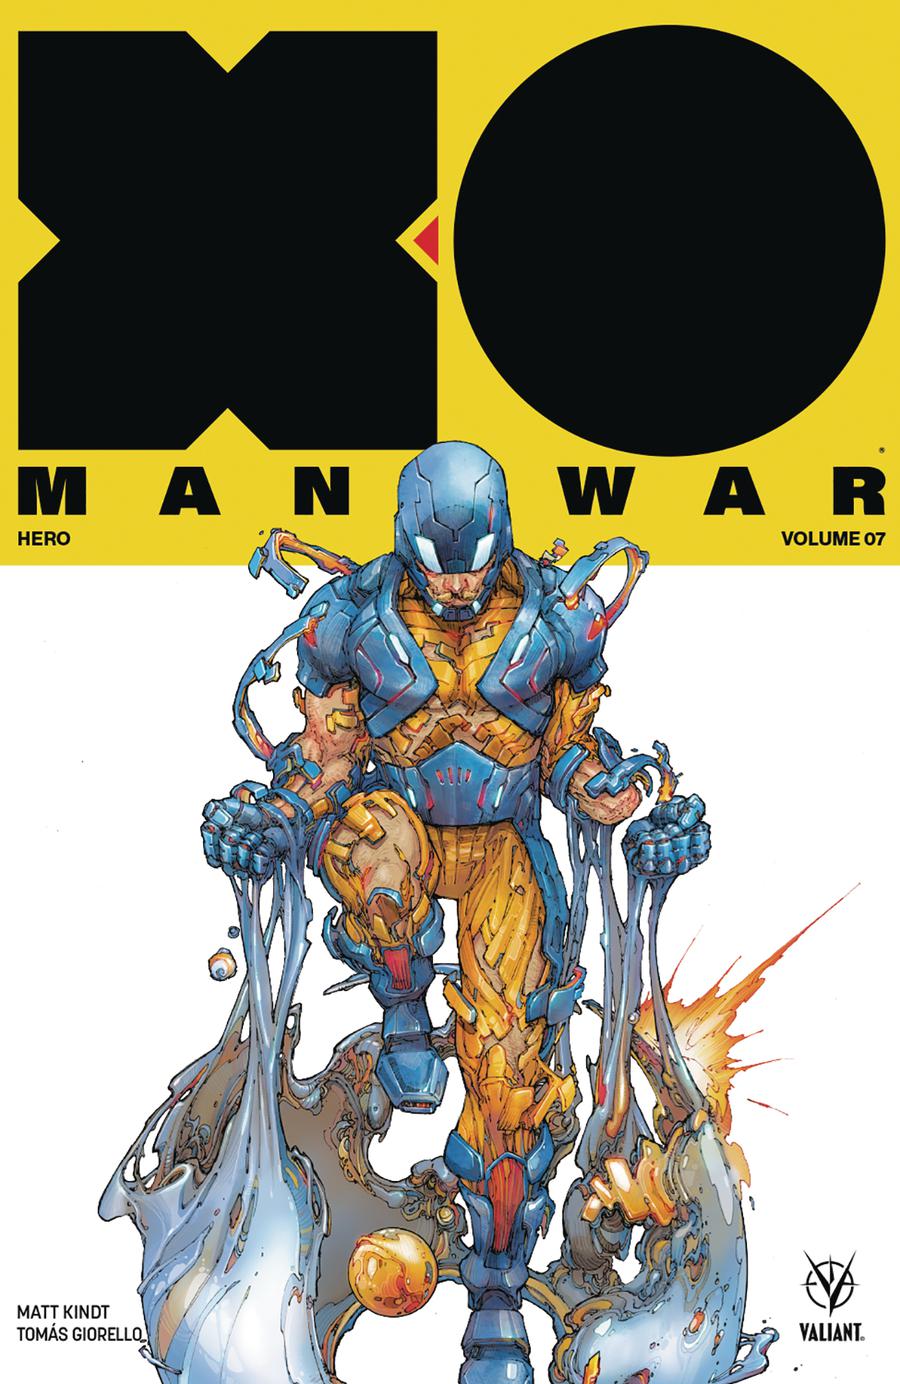 X-O Manowar (2017) Vol 7 Hero TP